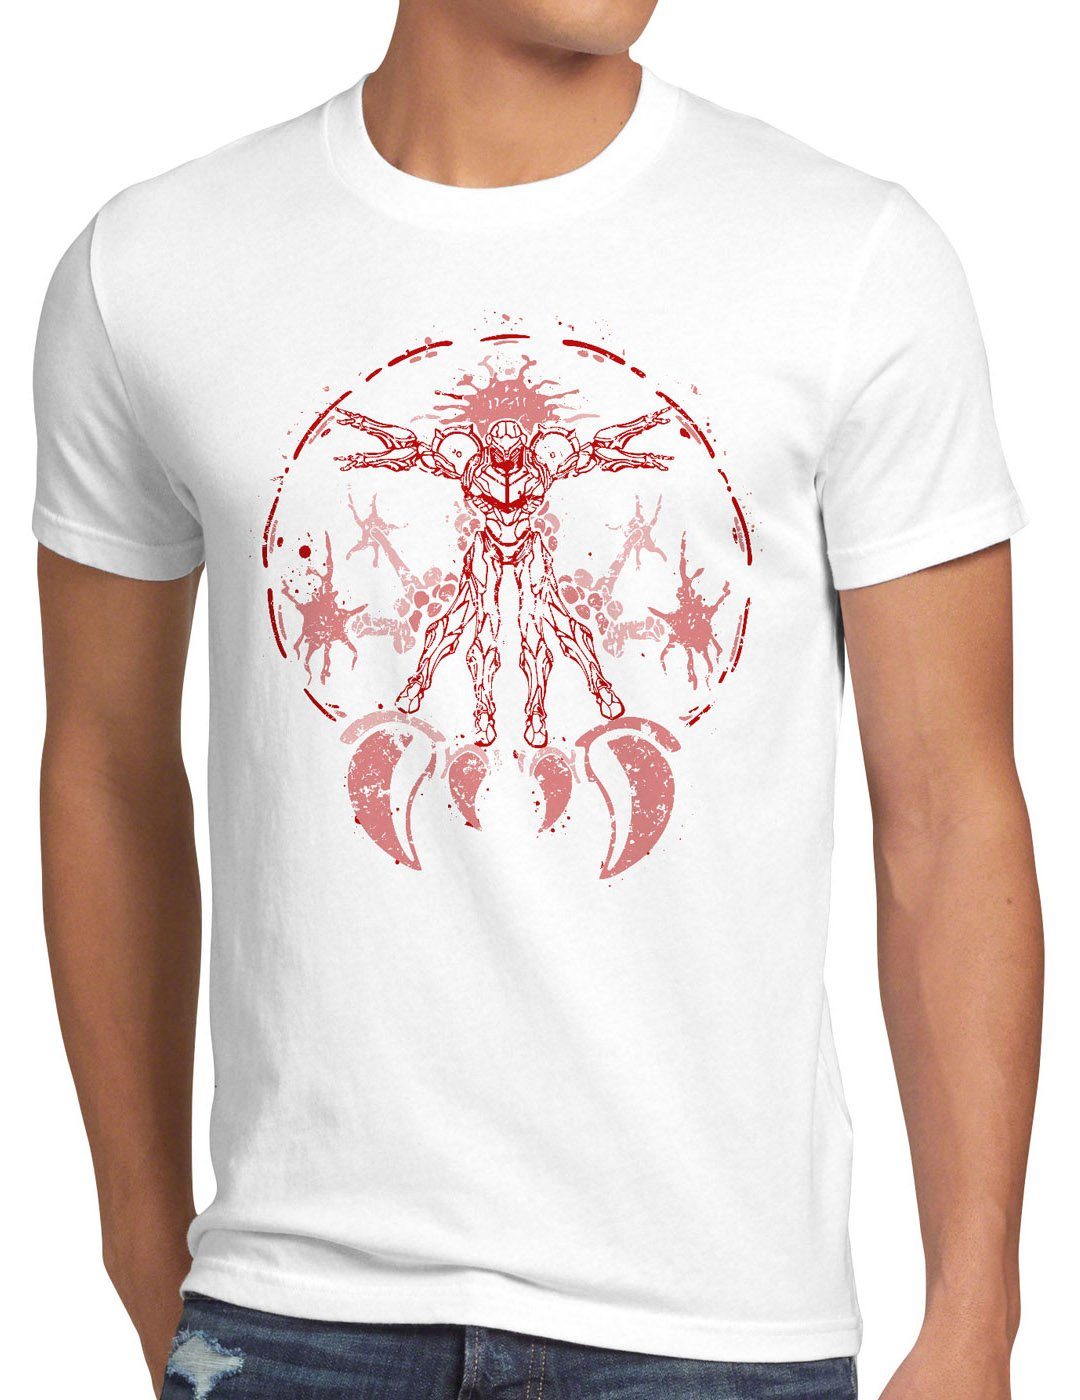 style3 Print-Shirt Herren T-Shirt Samus DaVinci nerd gamer nes snes geek switch 3ds prime 4 aran weiß